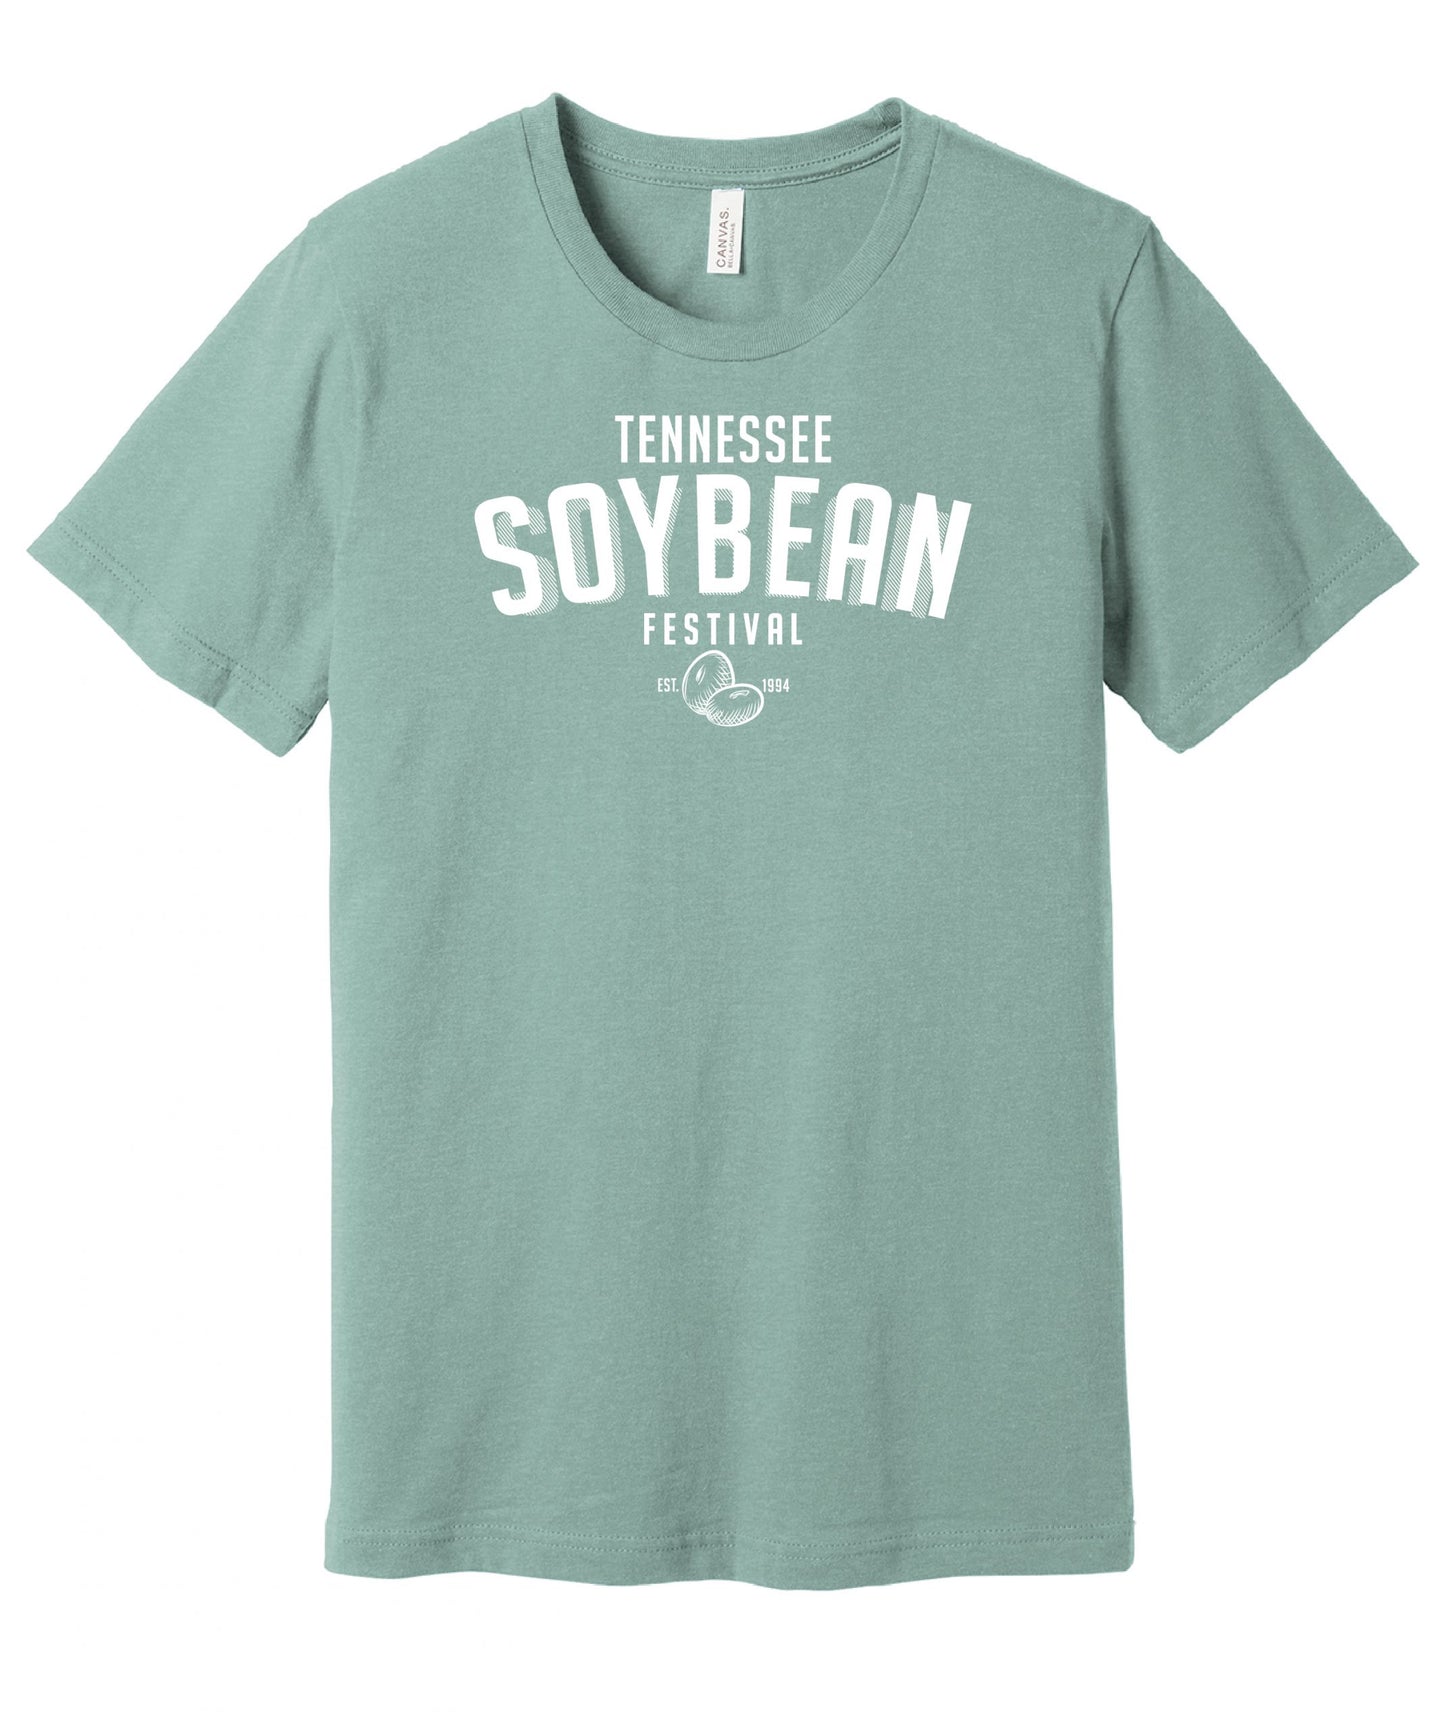 Tennessee Soybean Festival Shirt